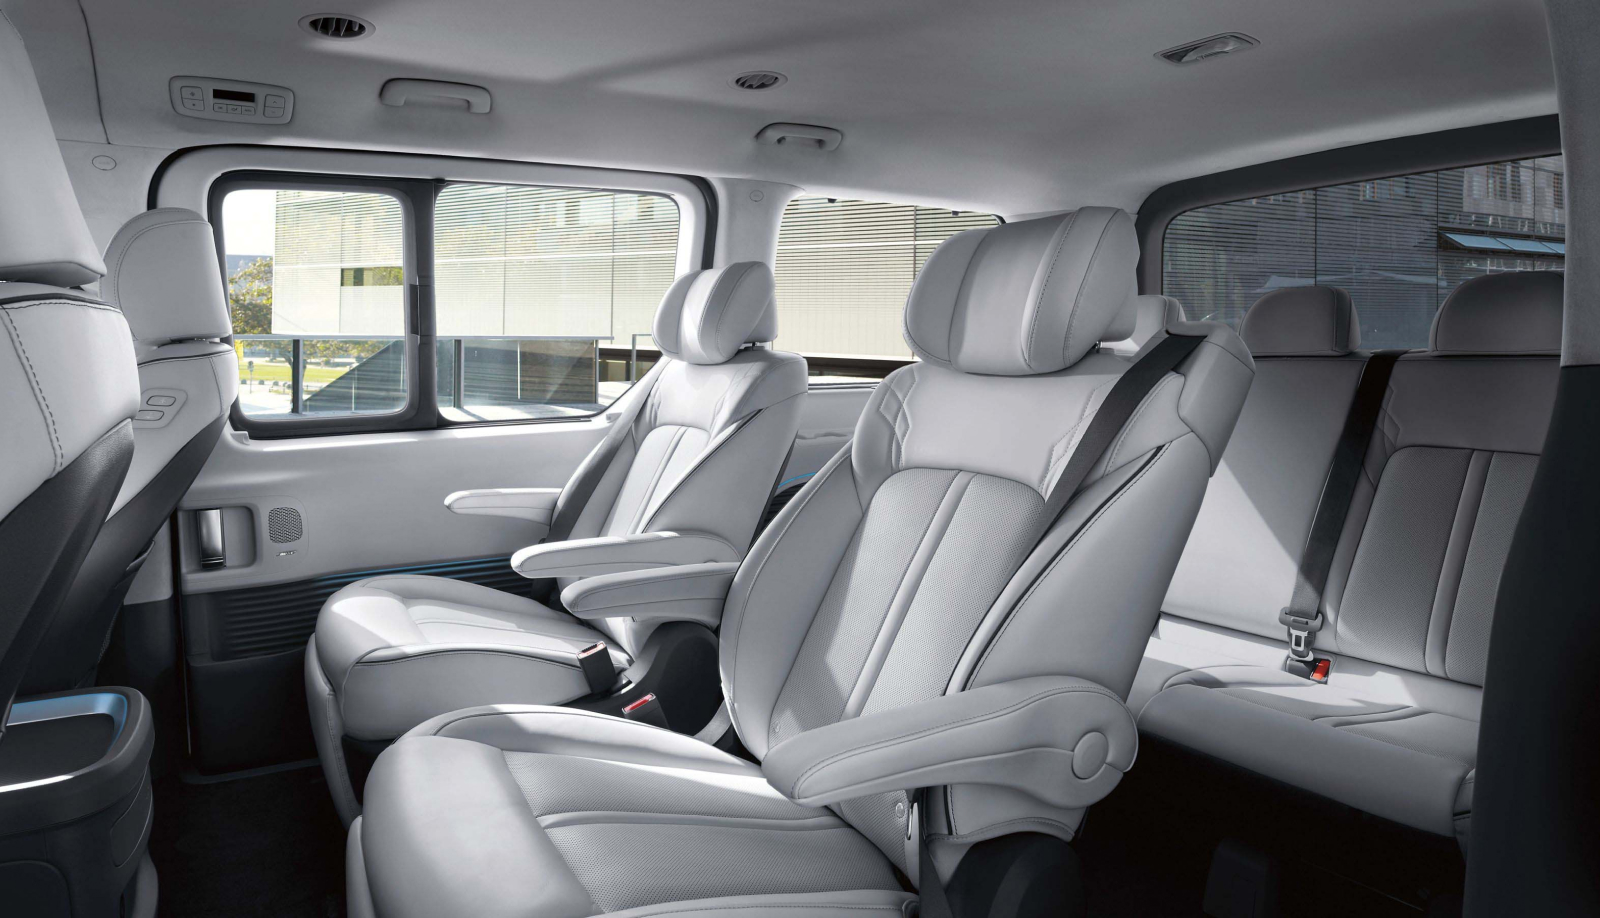 Design sketch of the all-new Hyundai Tucson compact SUV interior design.